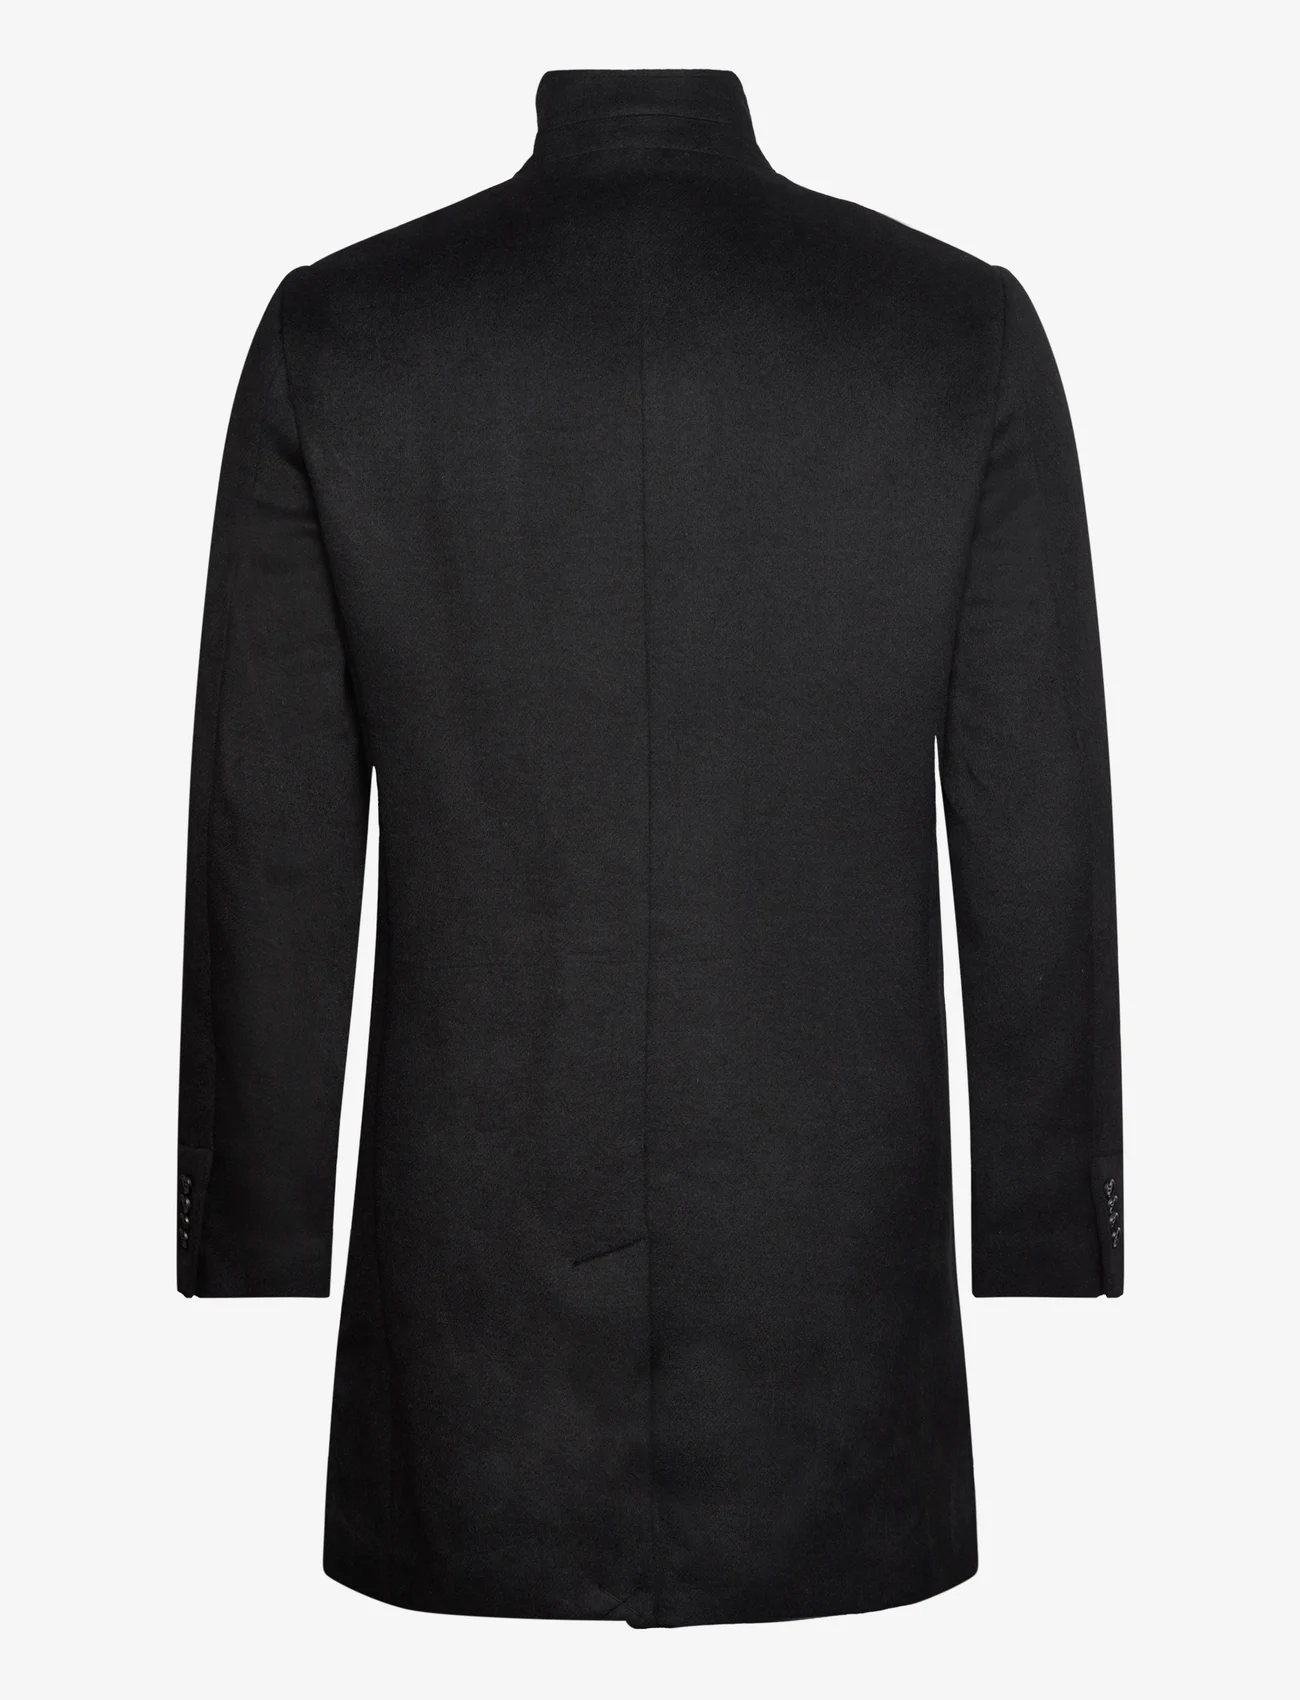 Bruuns Bazaar - KatBBAustin coat - vinterjakker - black - 1